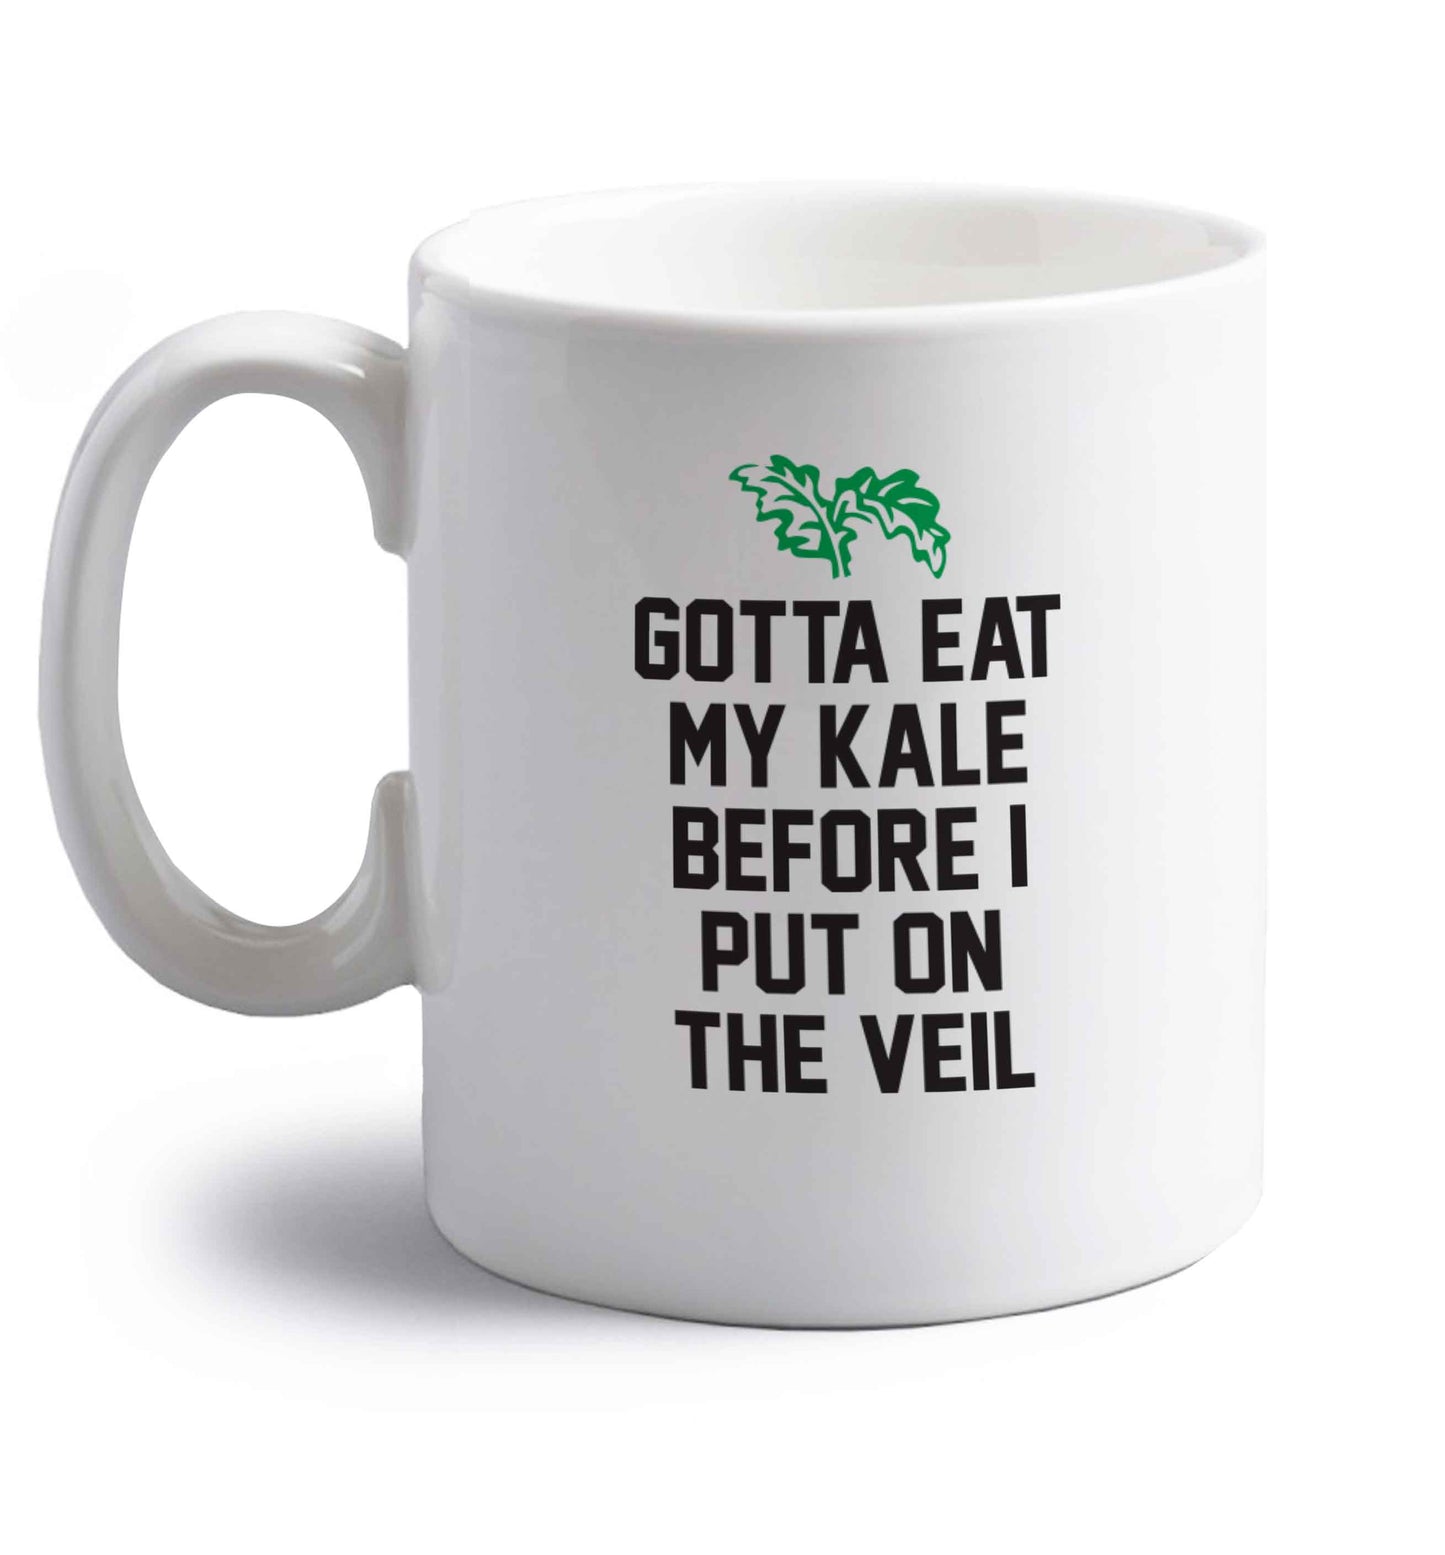 Gotta eat my kale before I put on the veil right handed white ceramic mug 